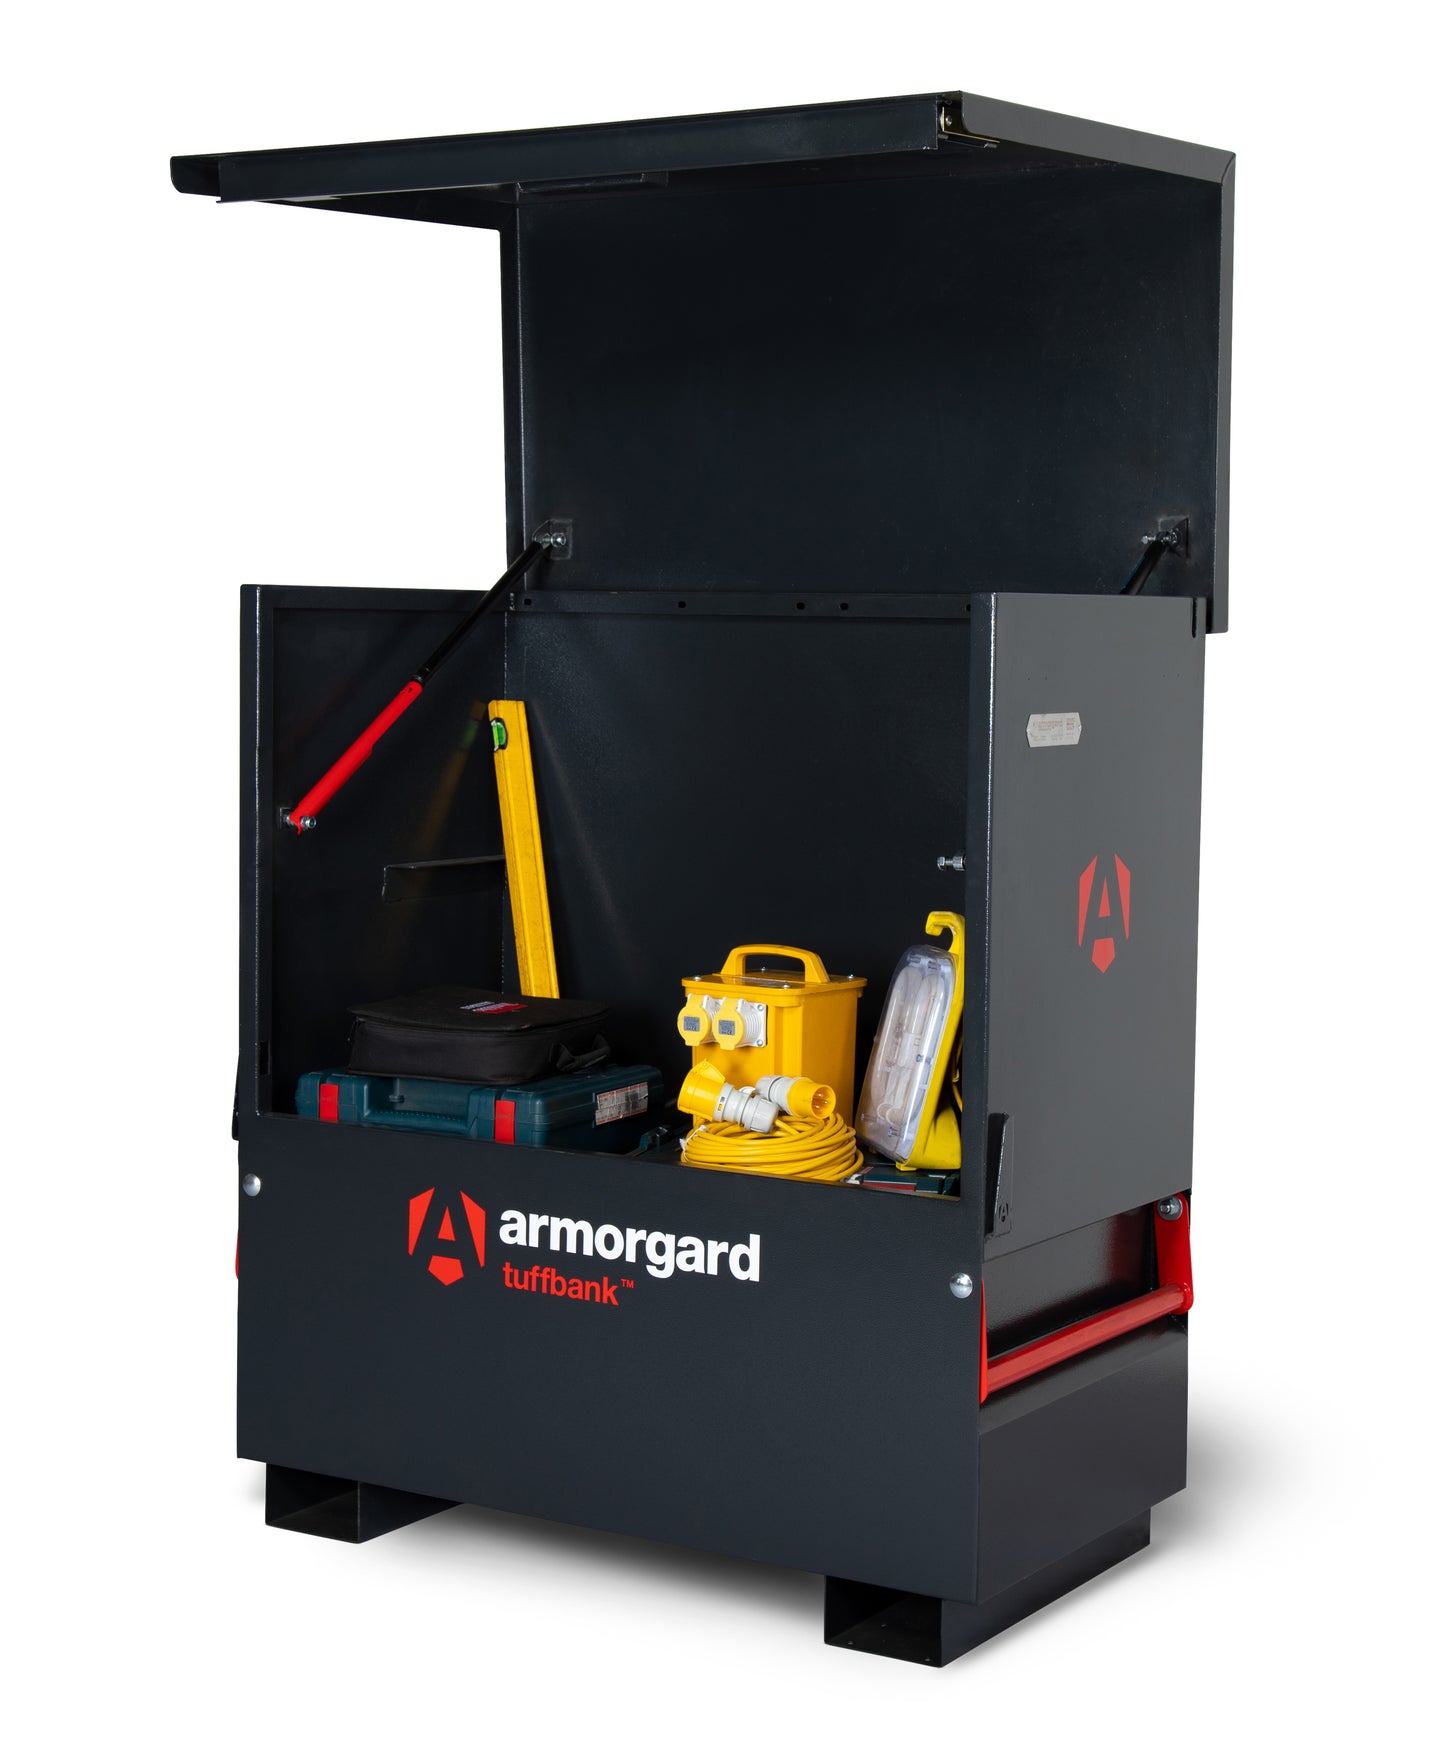 Armorgard - All Sizes Tuffbank Site Box & Site chest, Van vault Tool storage